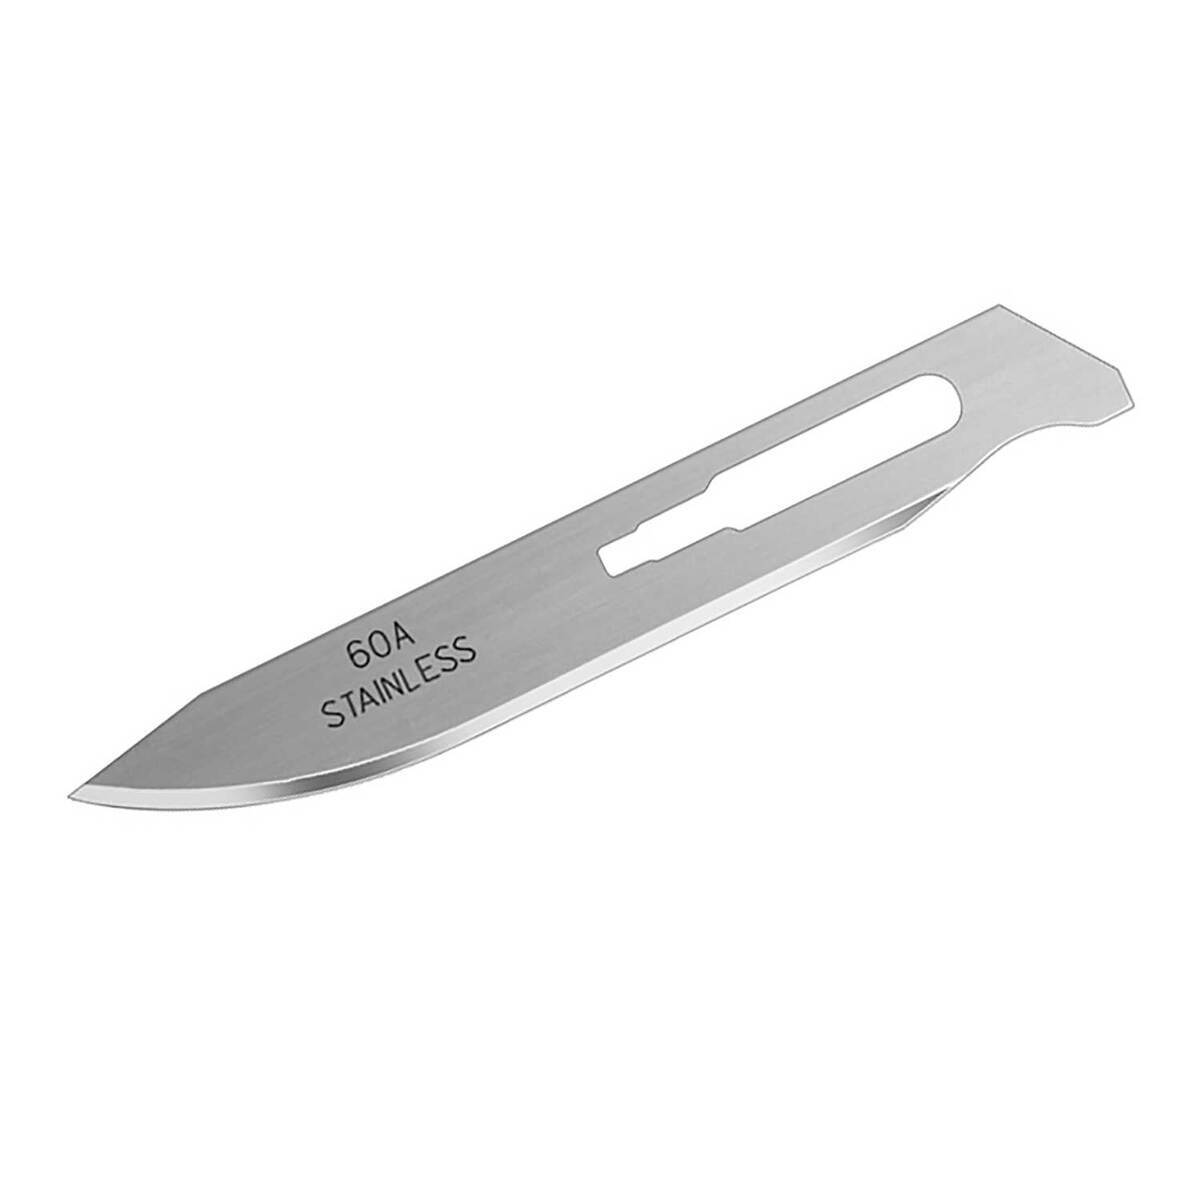 Havalon Knives Piranta-Edge Replaceable Blade Folding Knife